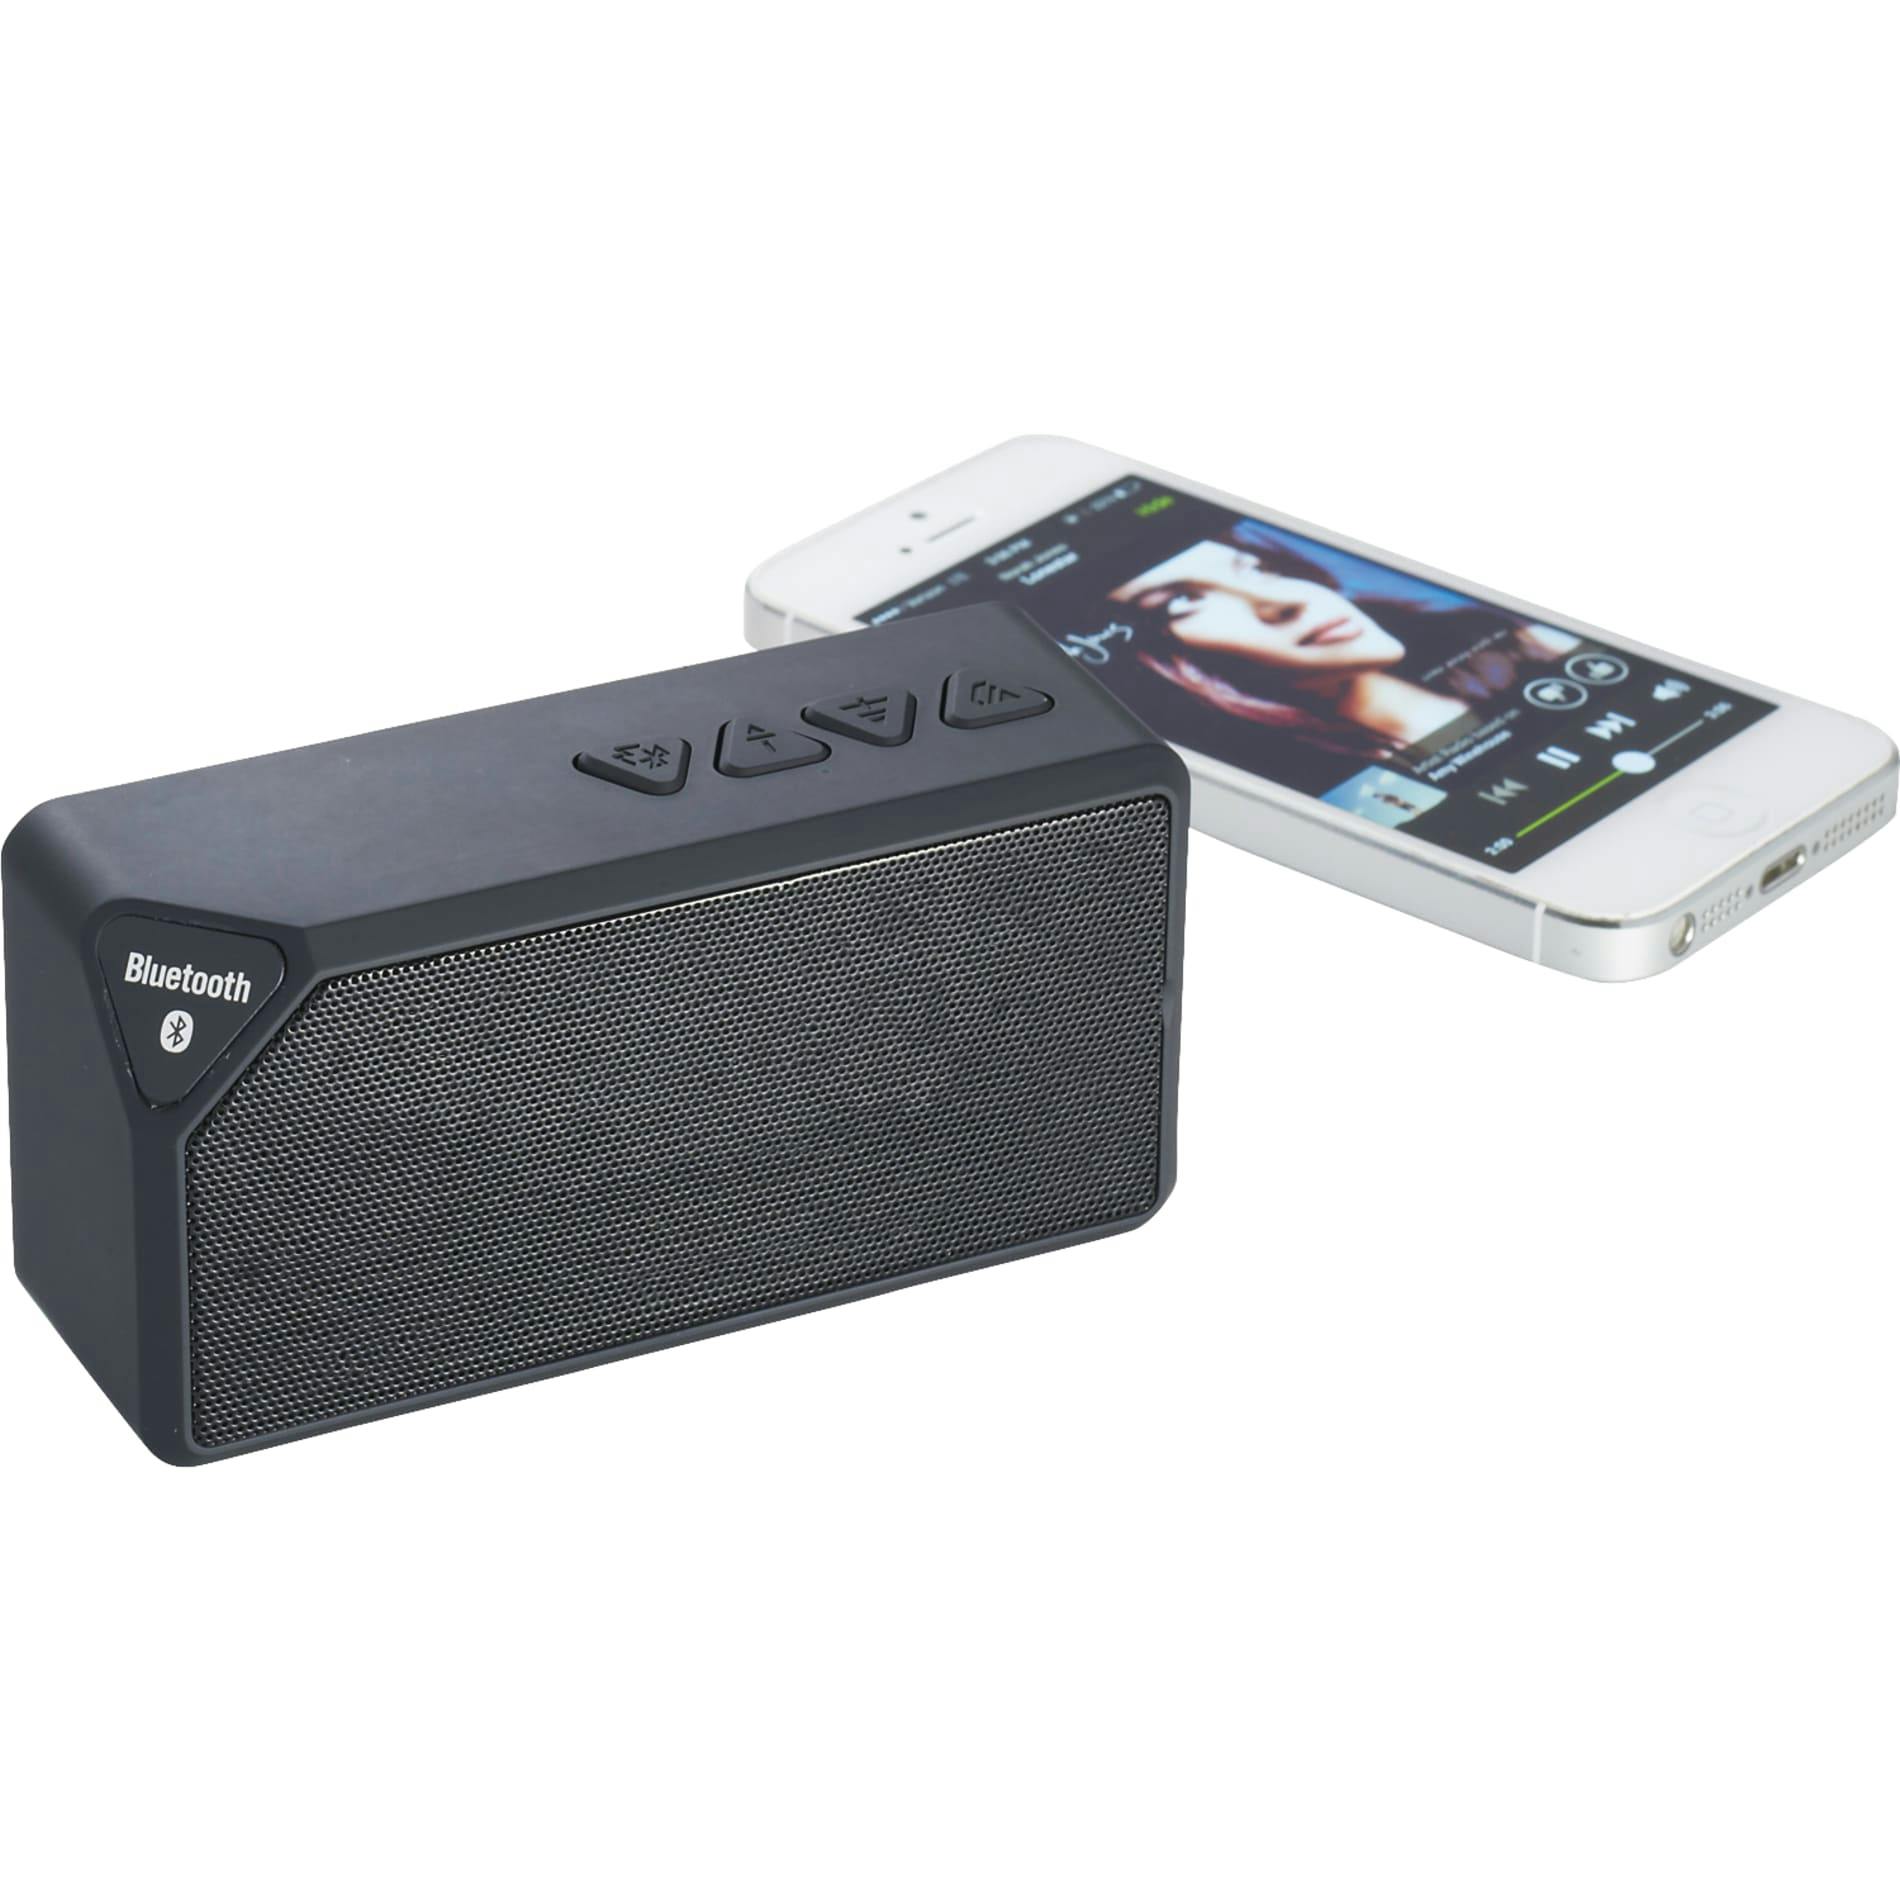 Jabba Bluetooth Speaker - additional Image 5